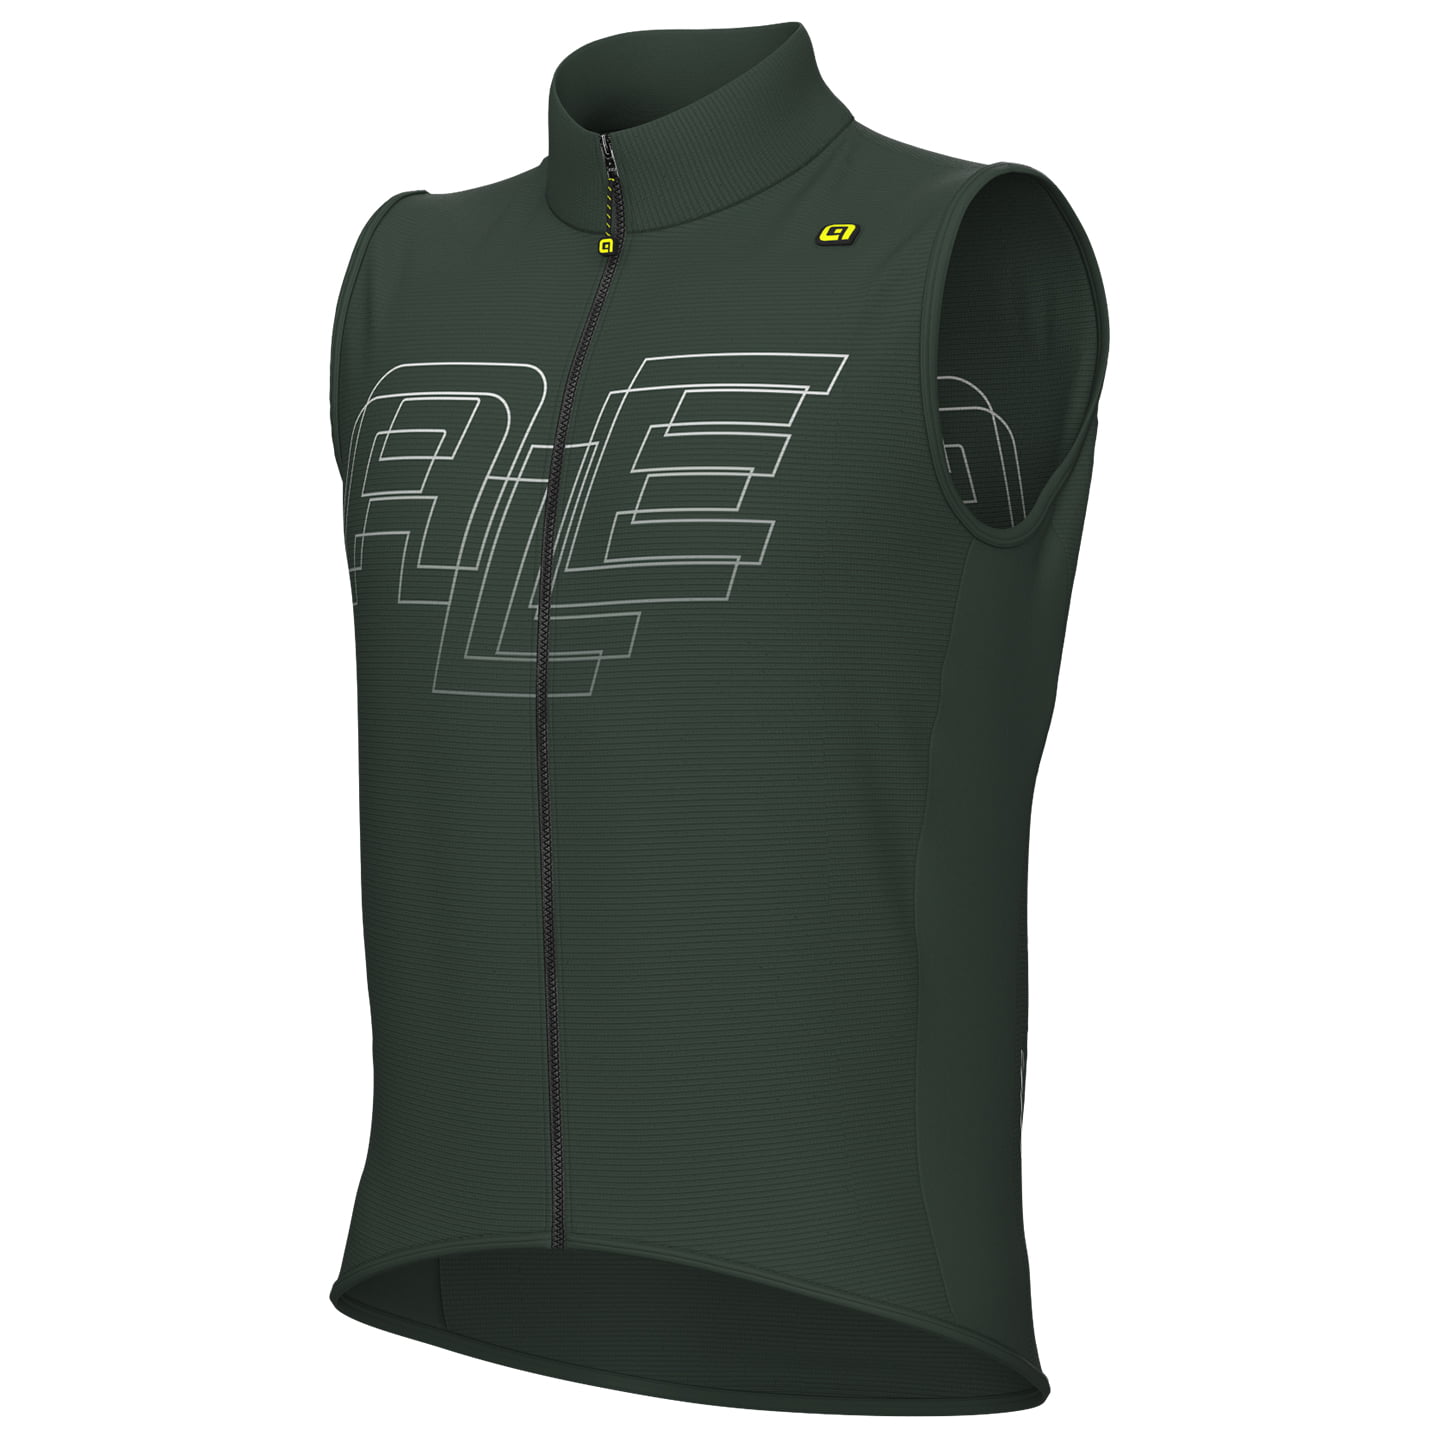 Wind Vest, for men, size L, Cycling vest, Cycle gear